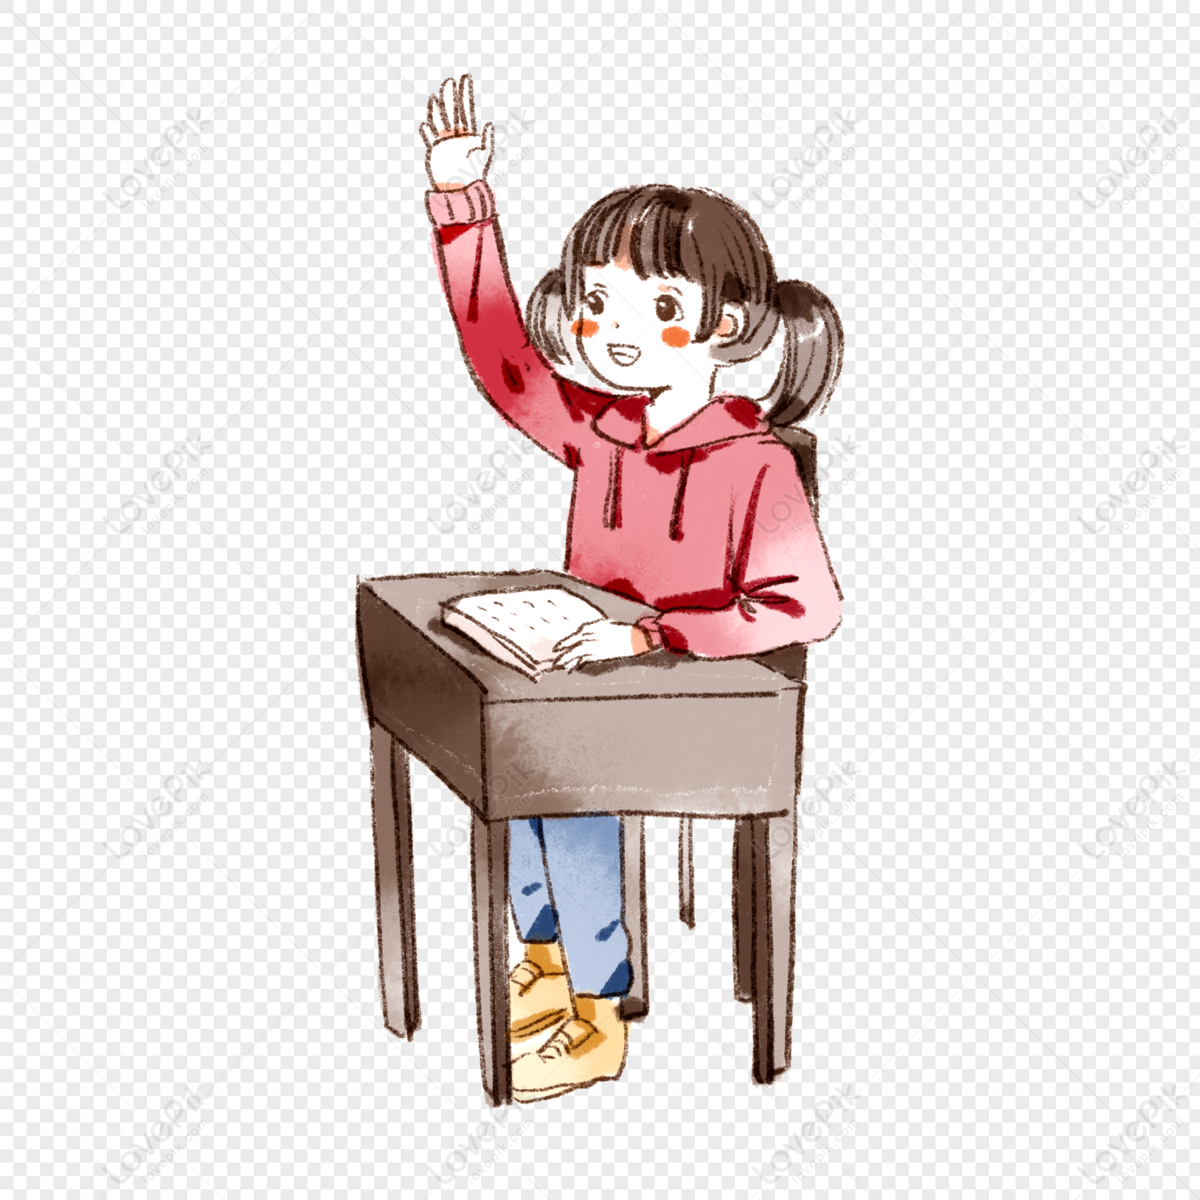 Girl Raising Her Hand Clipart Image